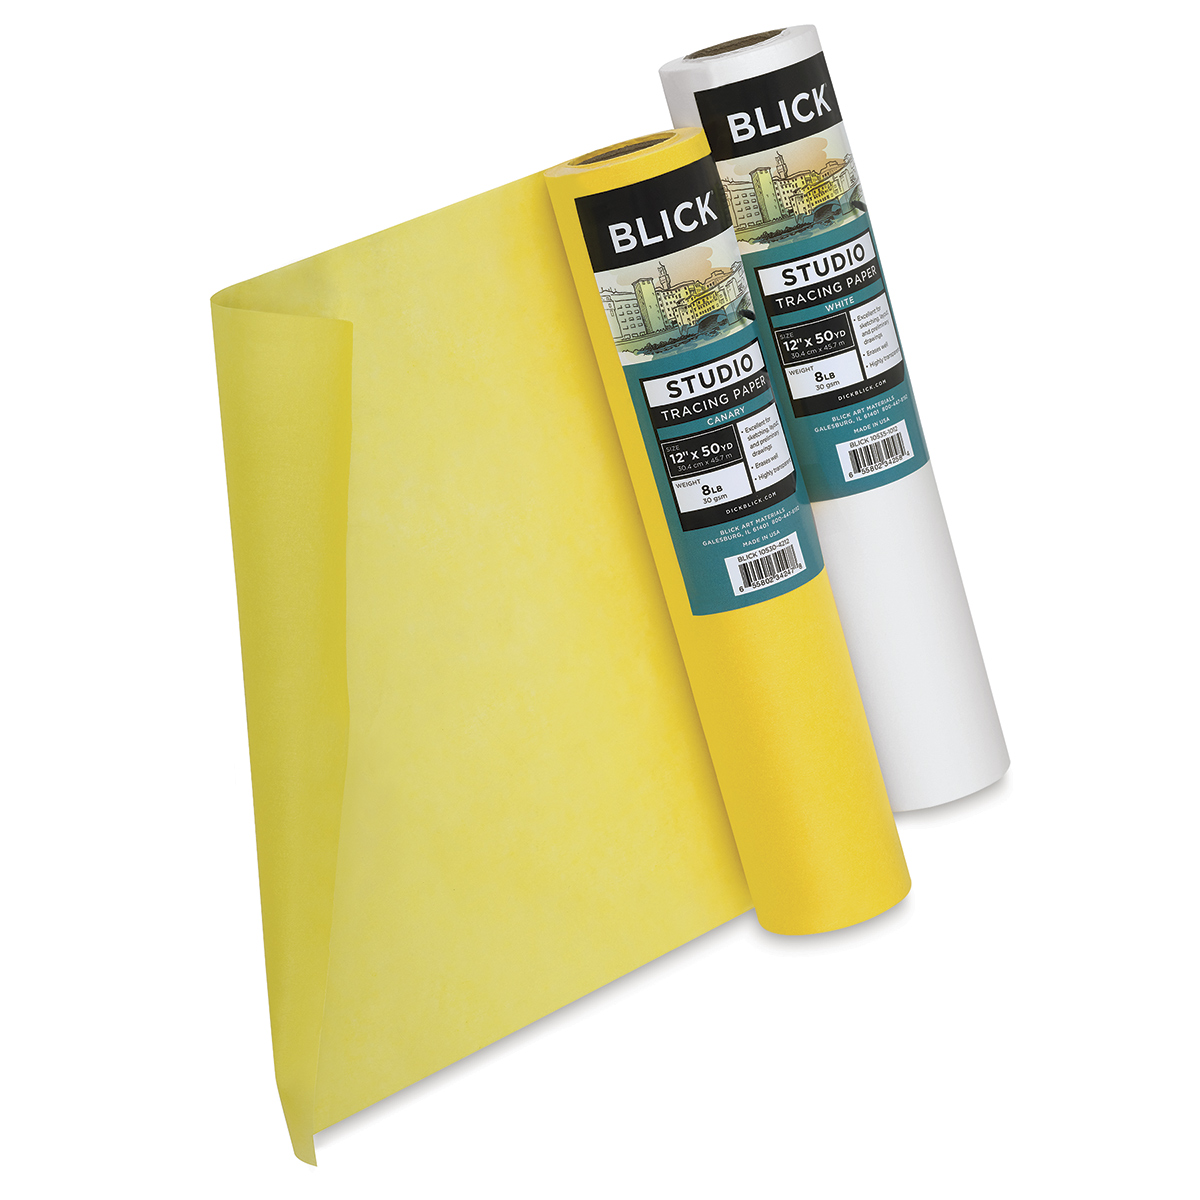 Blick Studio Sketch Pad - 8-1/2 inch x 11 inch, 100 Sheets, Size: 8-1/2 x 11, 100 Sheets